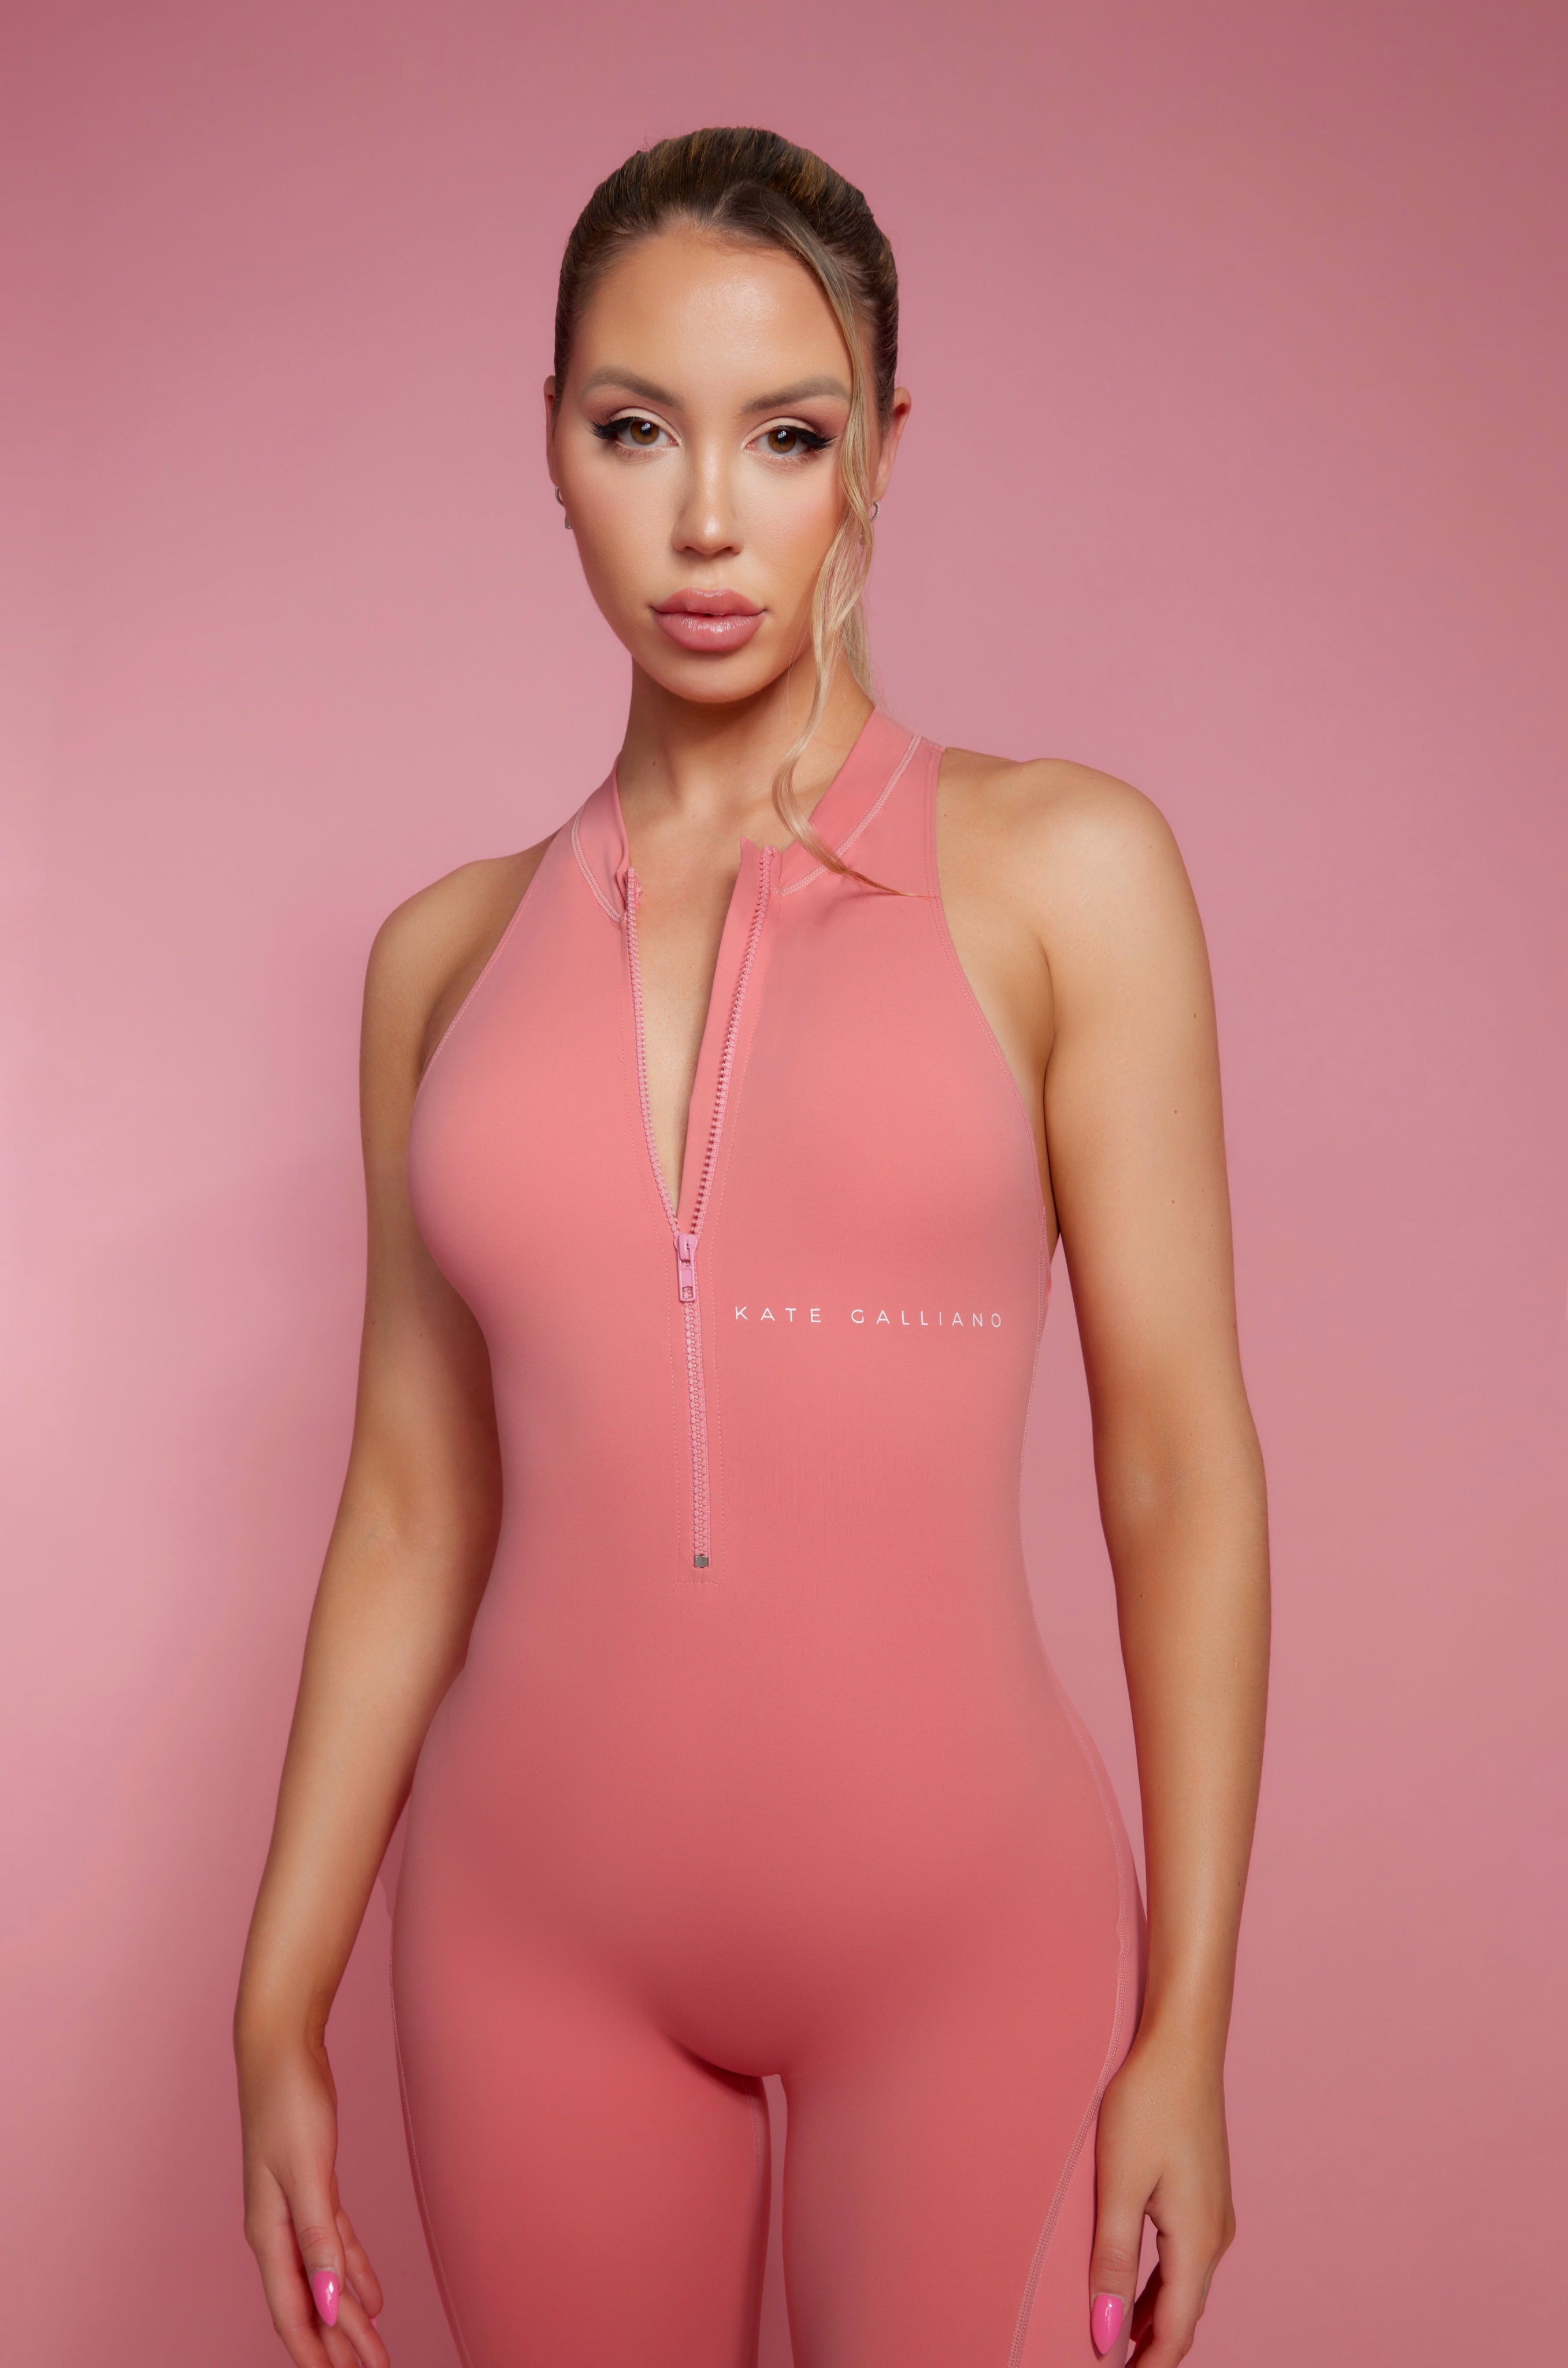 Barbie Pink jumpsuit | KATE GALLIANO activewear